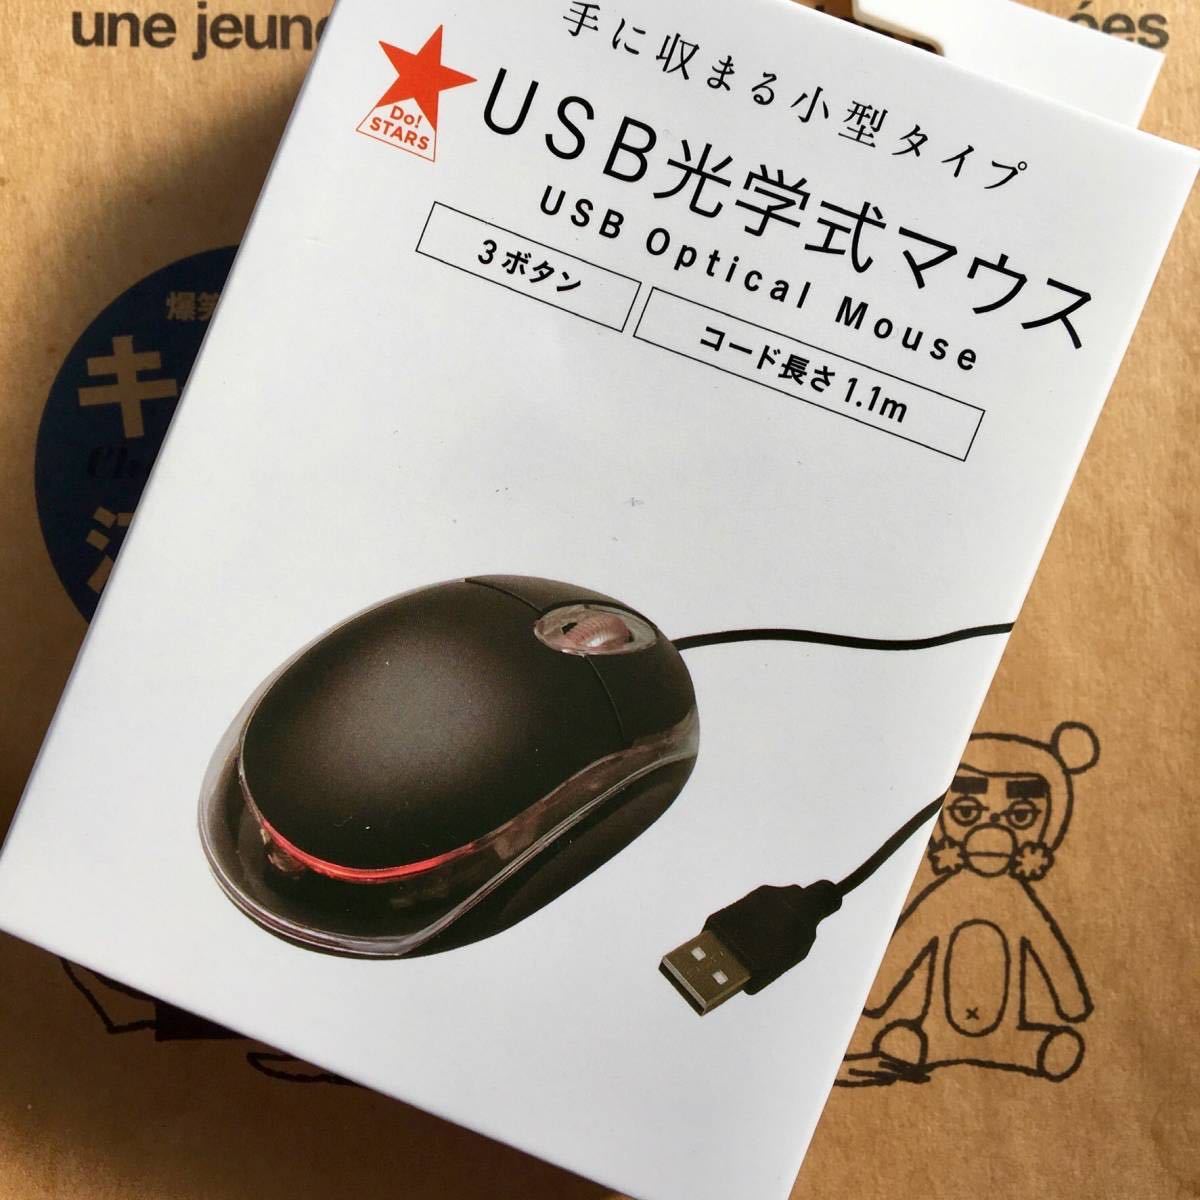 USB 光学式マウス 赤色LED Optical Mouse 有線マウス #2 在宅勤務 テレワーク リモートワーク 遠隔授業 リモート授業_画像1